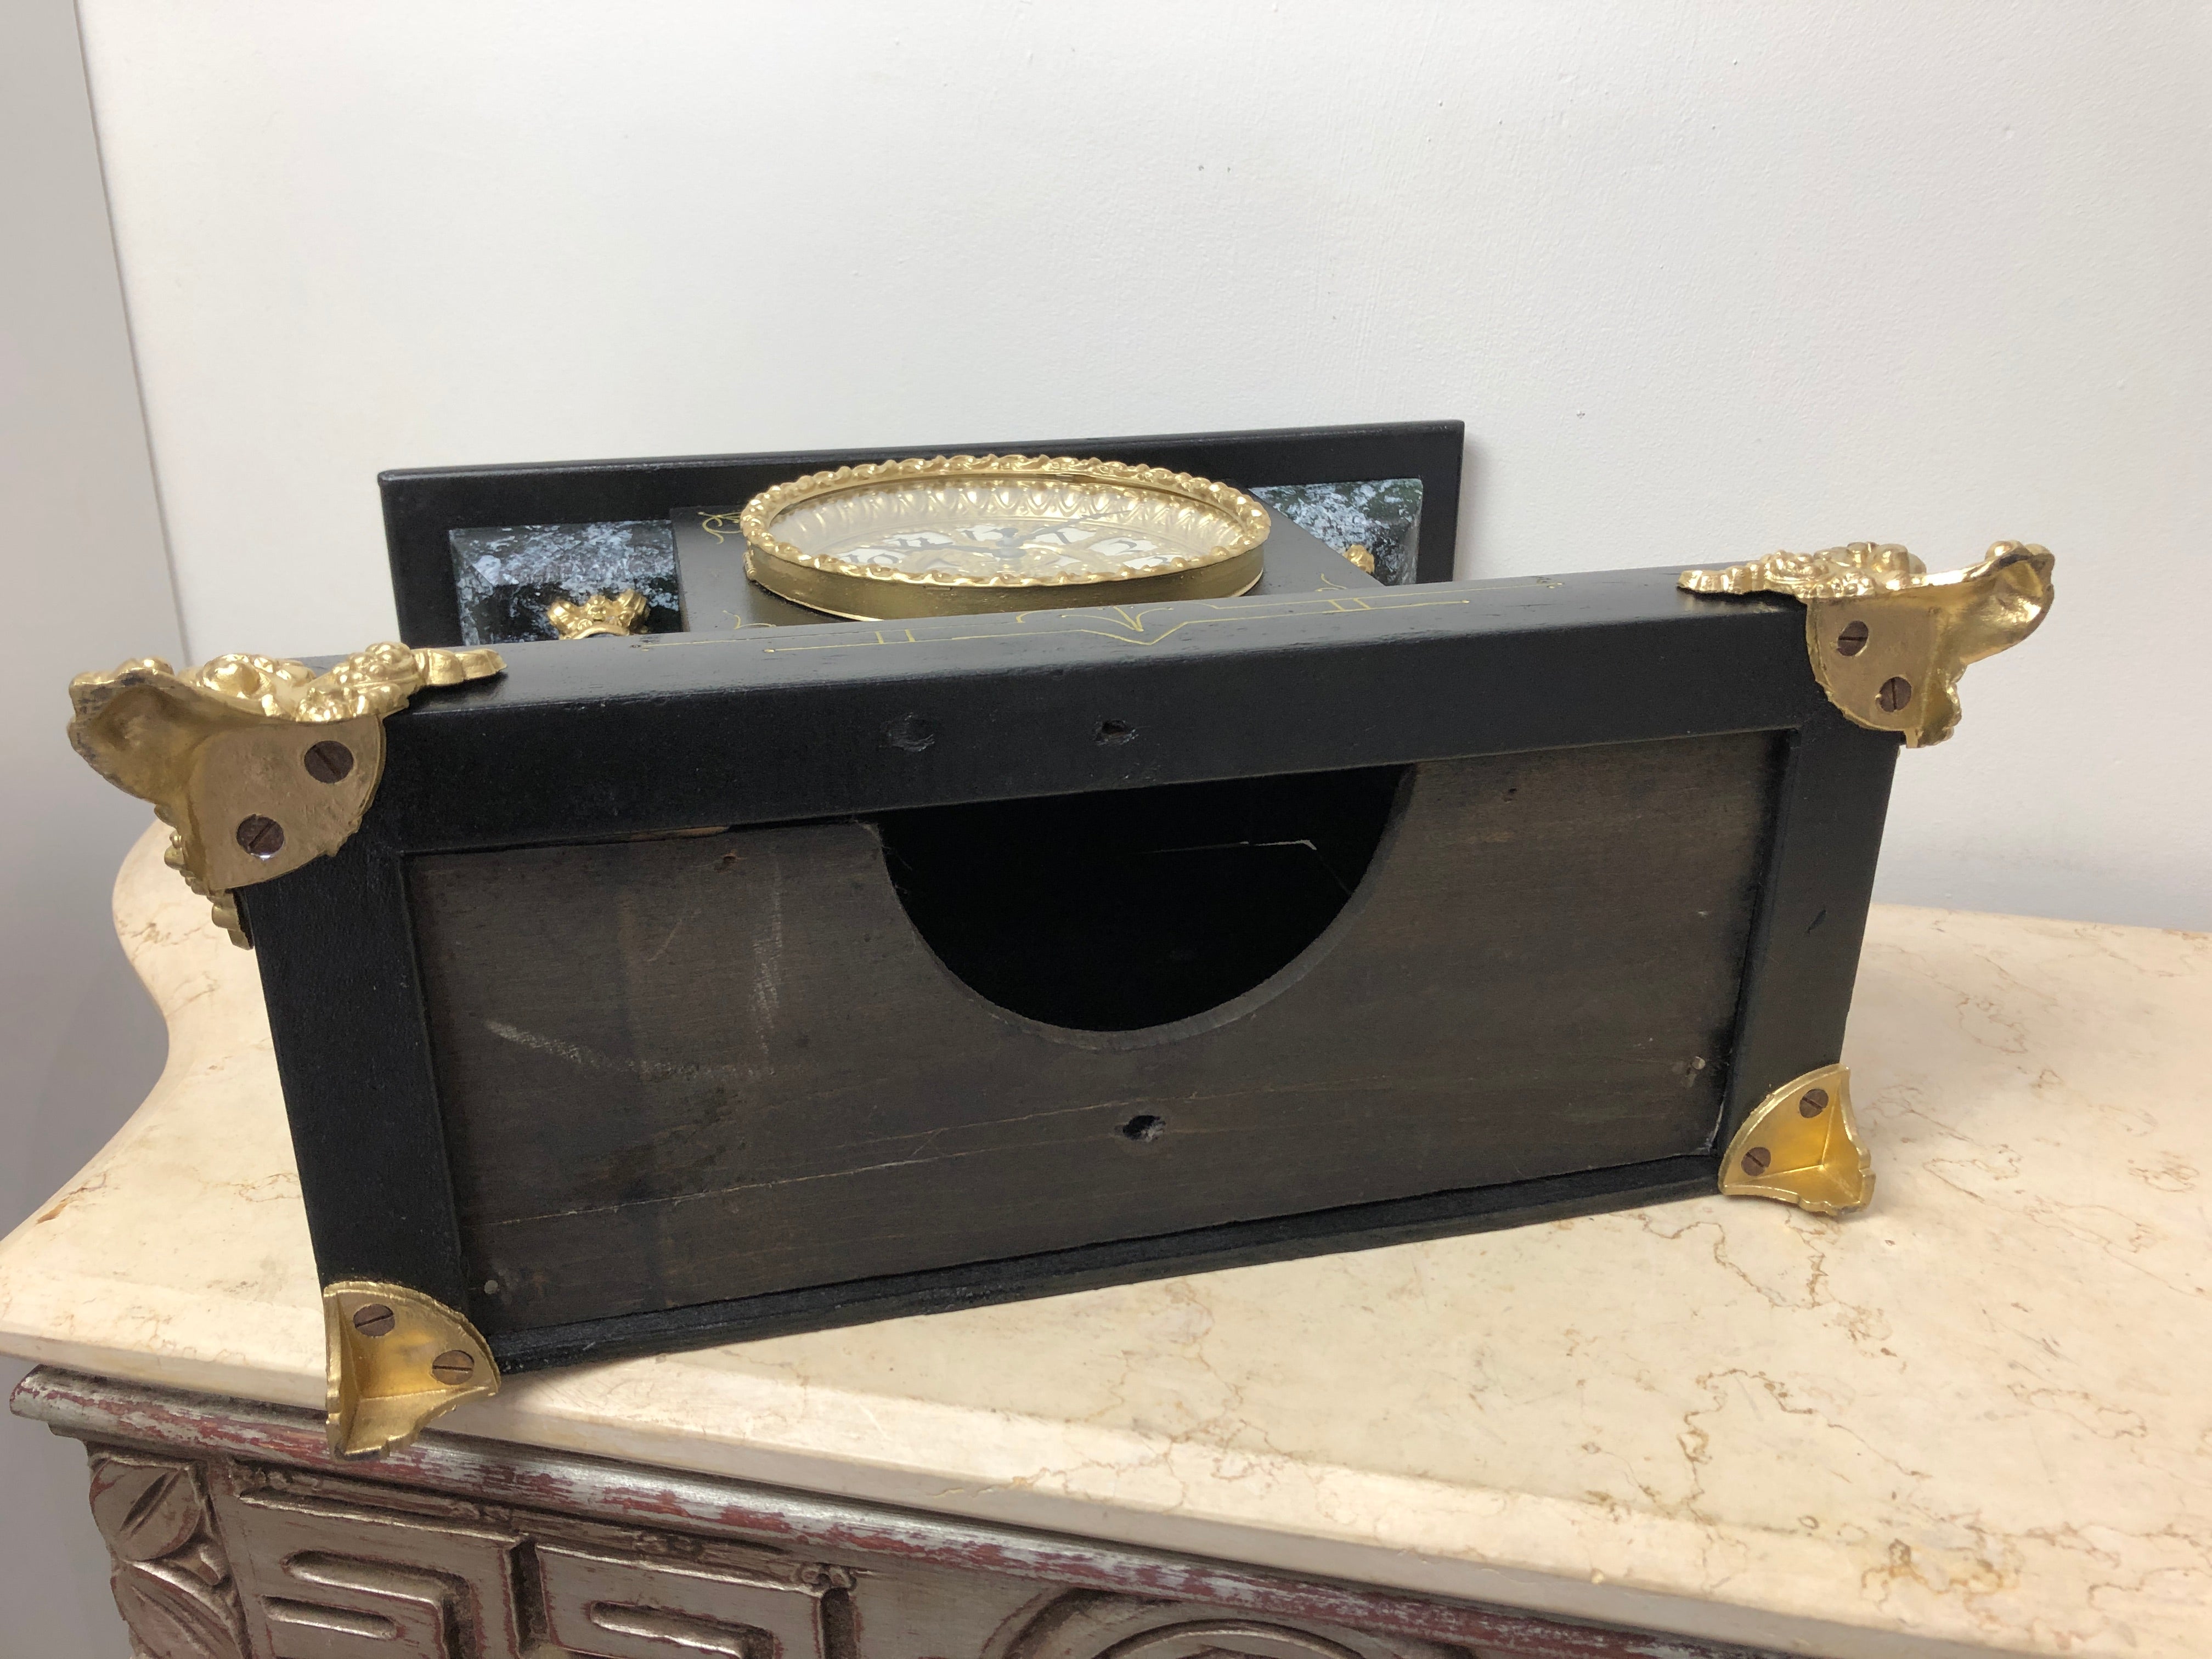  Antique GILBERT Quartz Battery Mantel Clock | eXibit collection